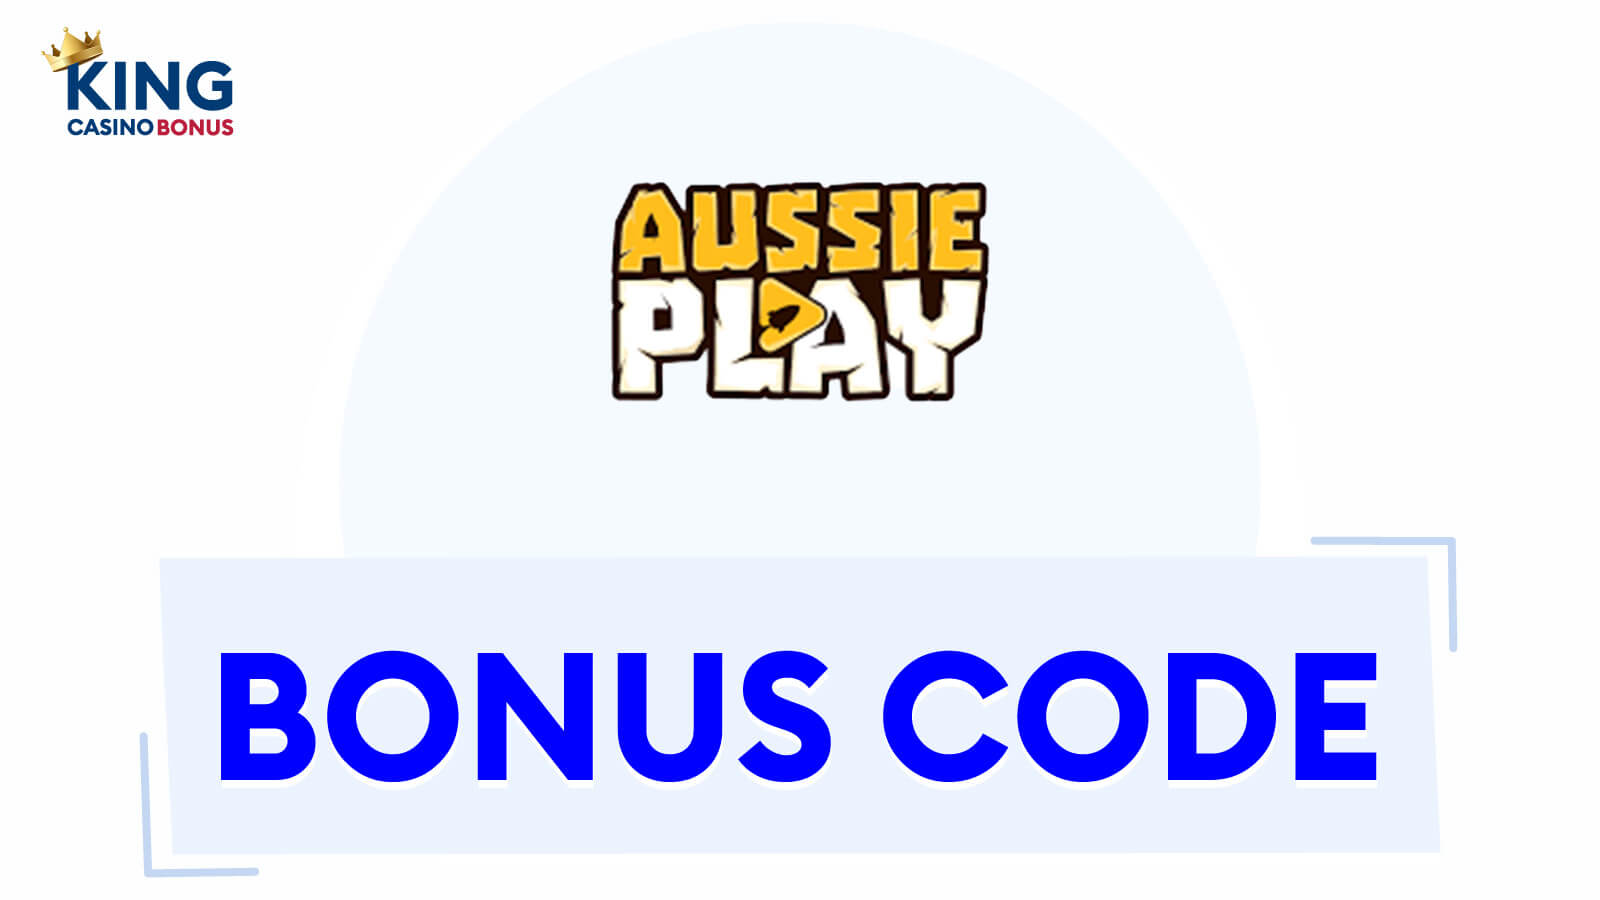 Aussie Play Casino Bonuses